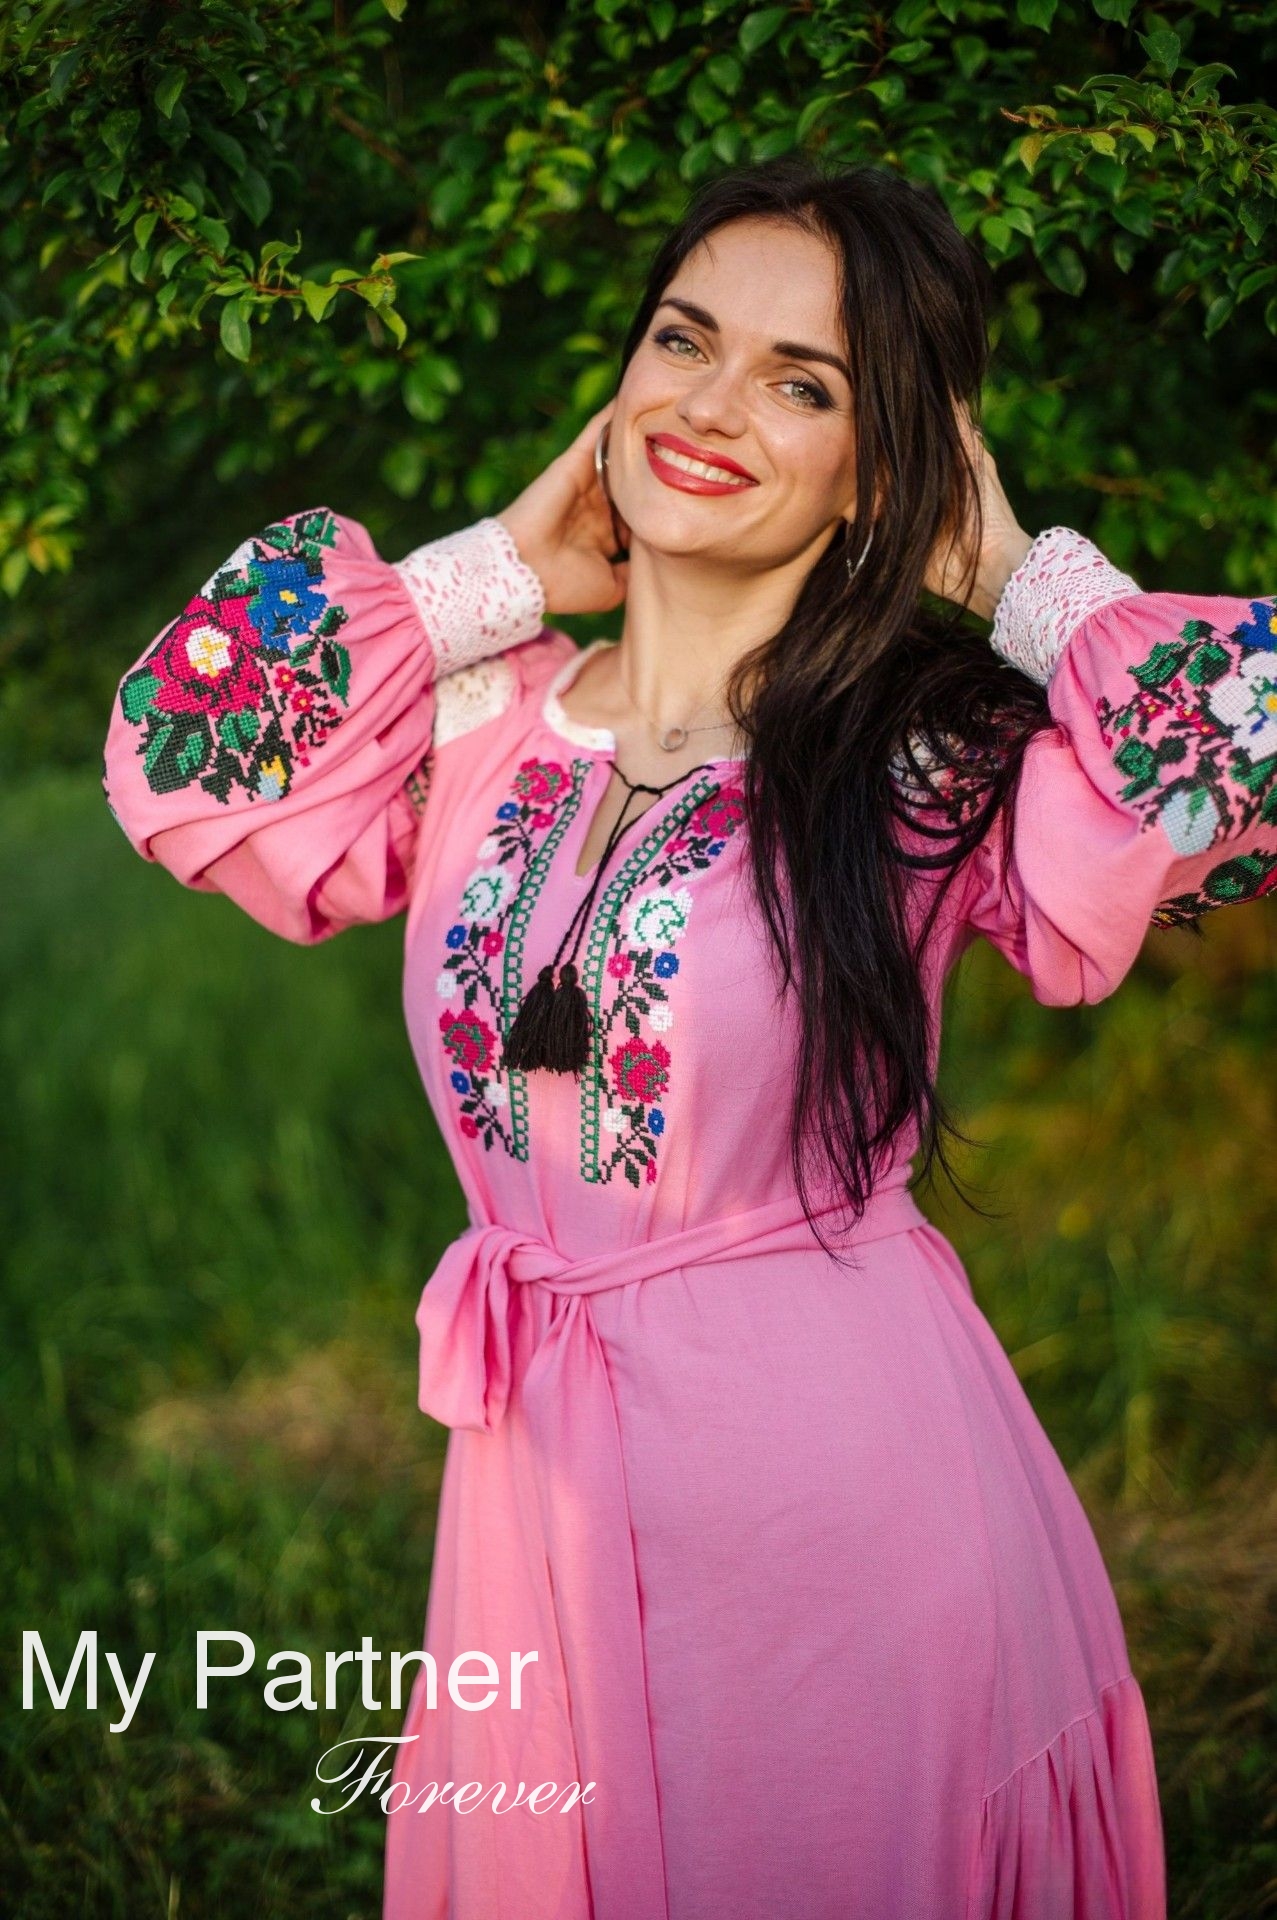 Dating Site to Meet Single Ukrainian Lady Irina from Ivano-Frankovsk, Ukraine